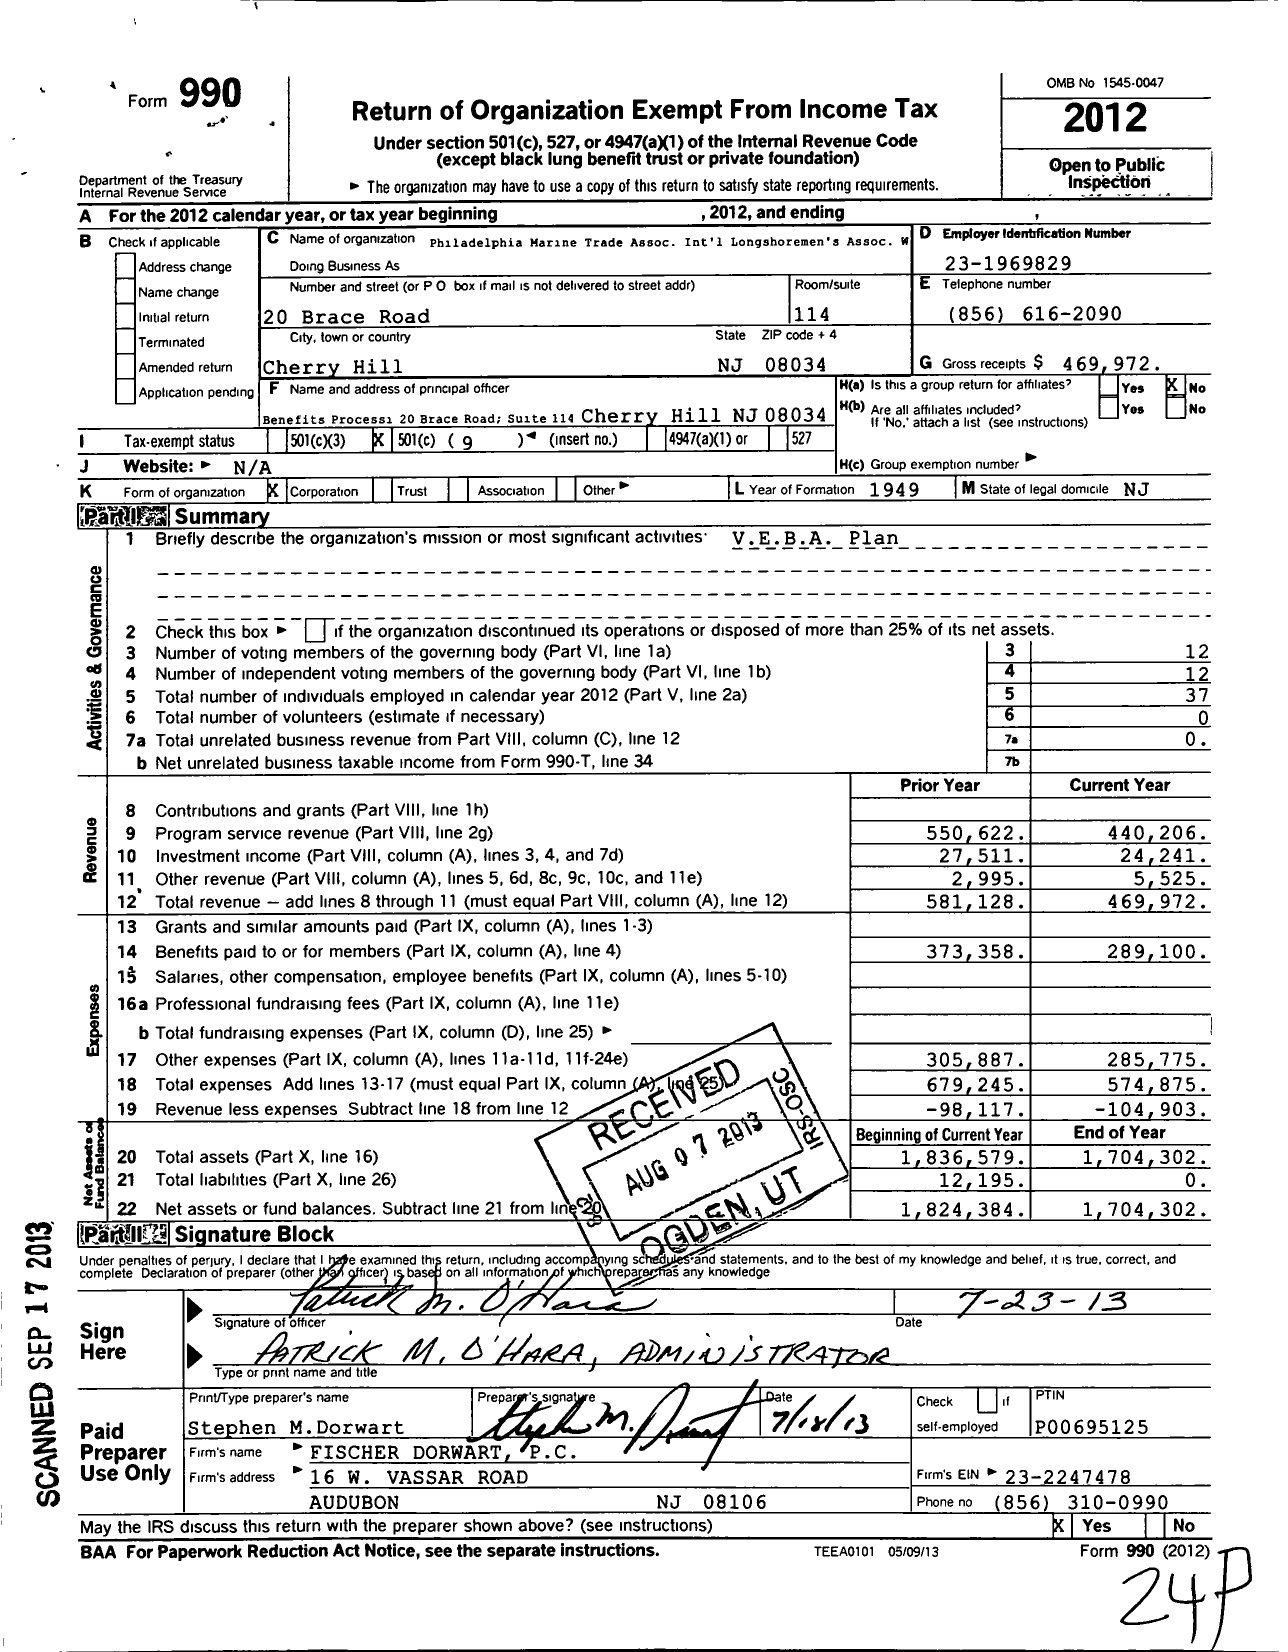 Image of first page of 2012 Form 990O for Philadelphia Marine Trade Association International Longshoremens Association Welfare